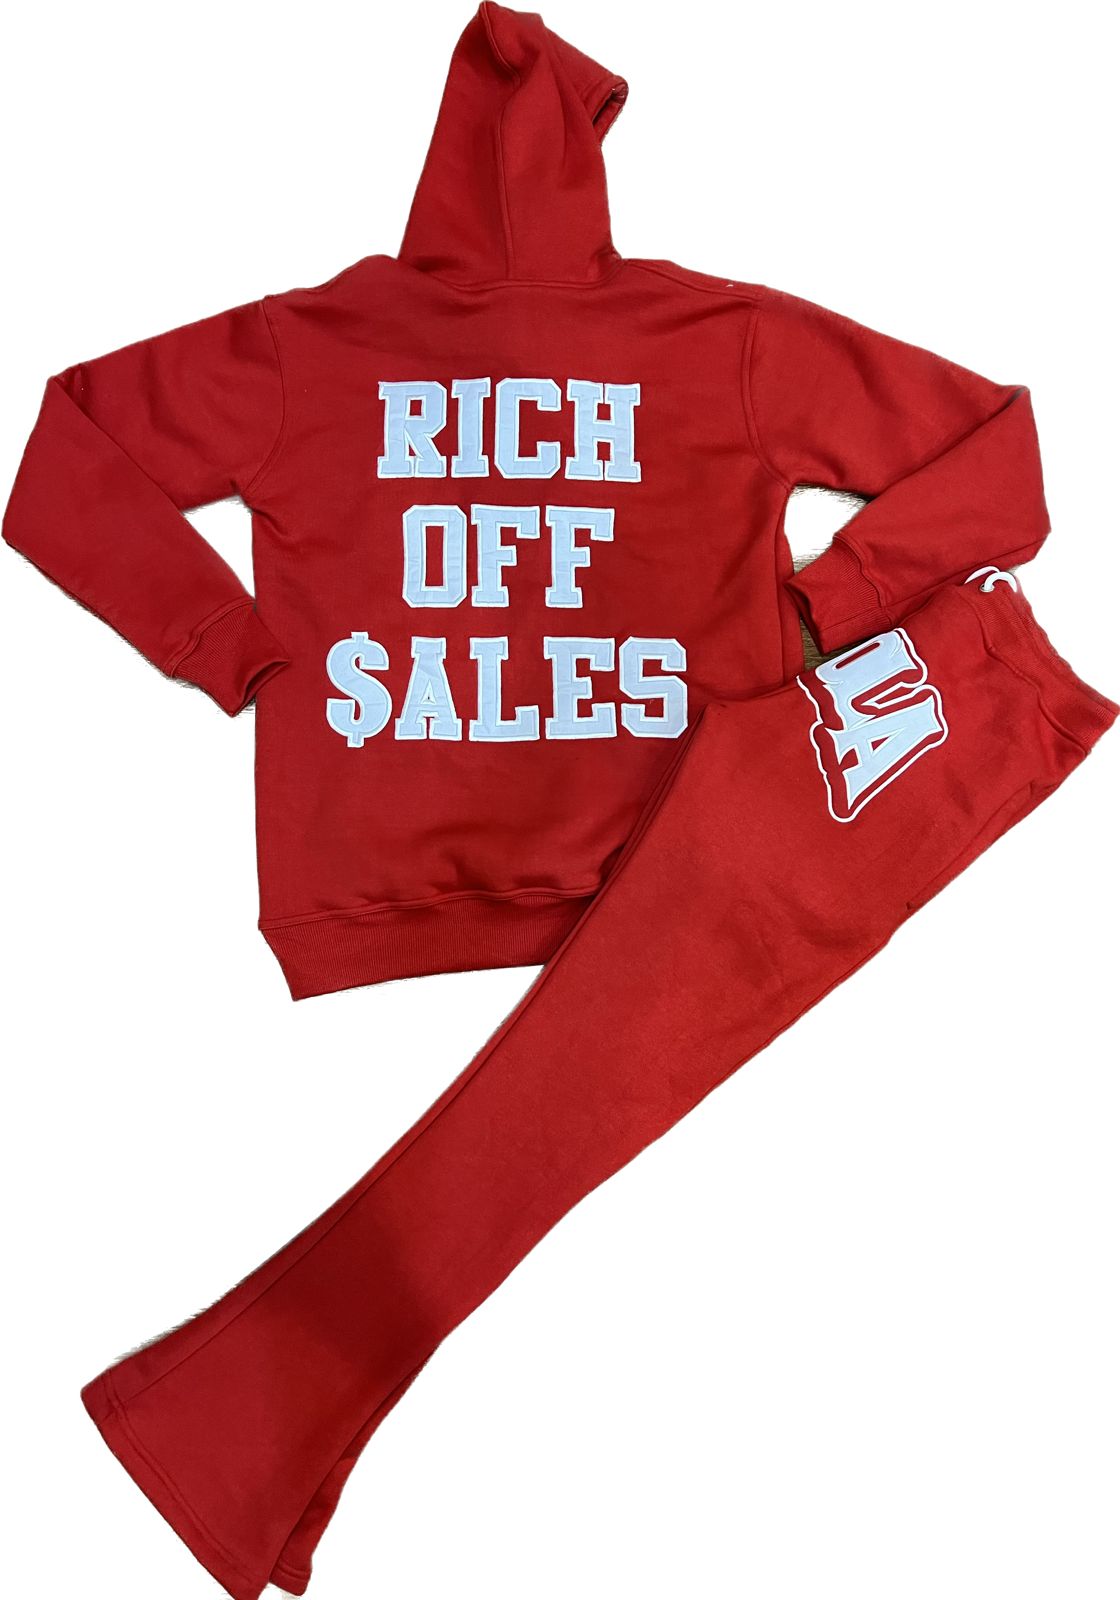 Rich Off Sales Jumpsuit (Red)